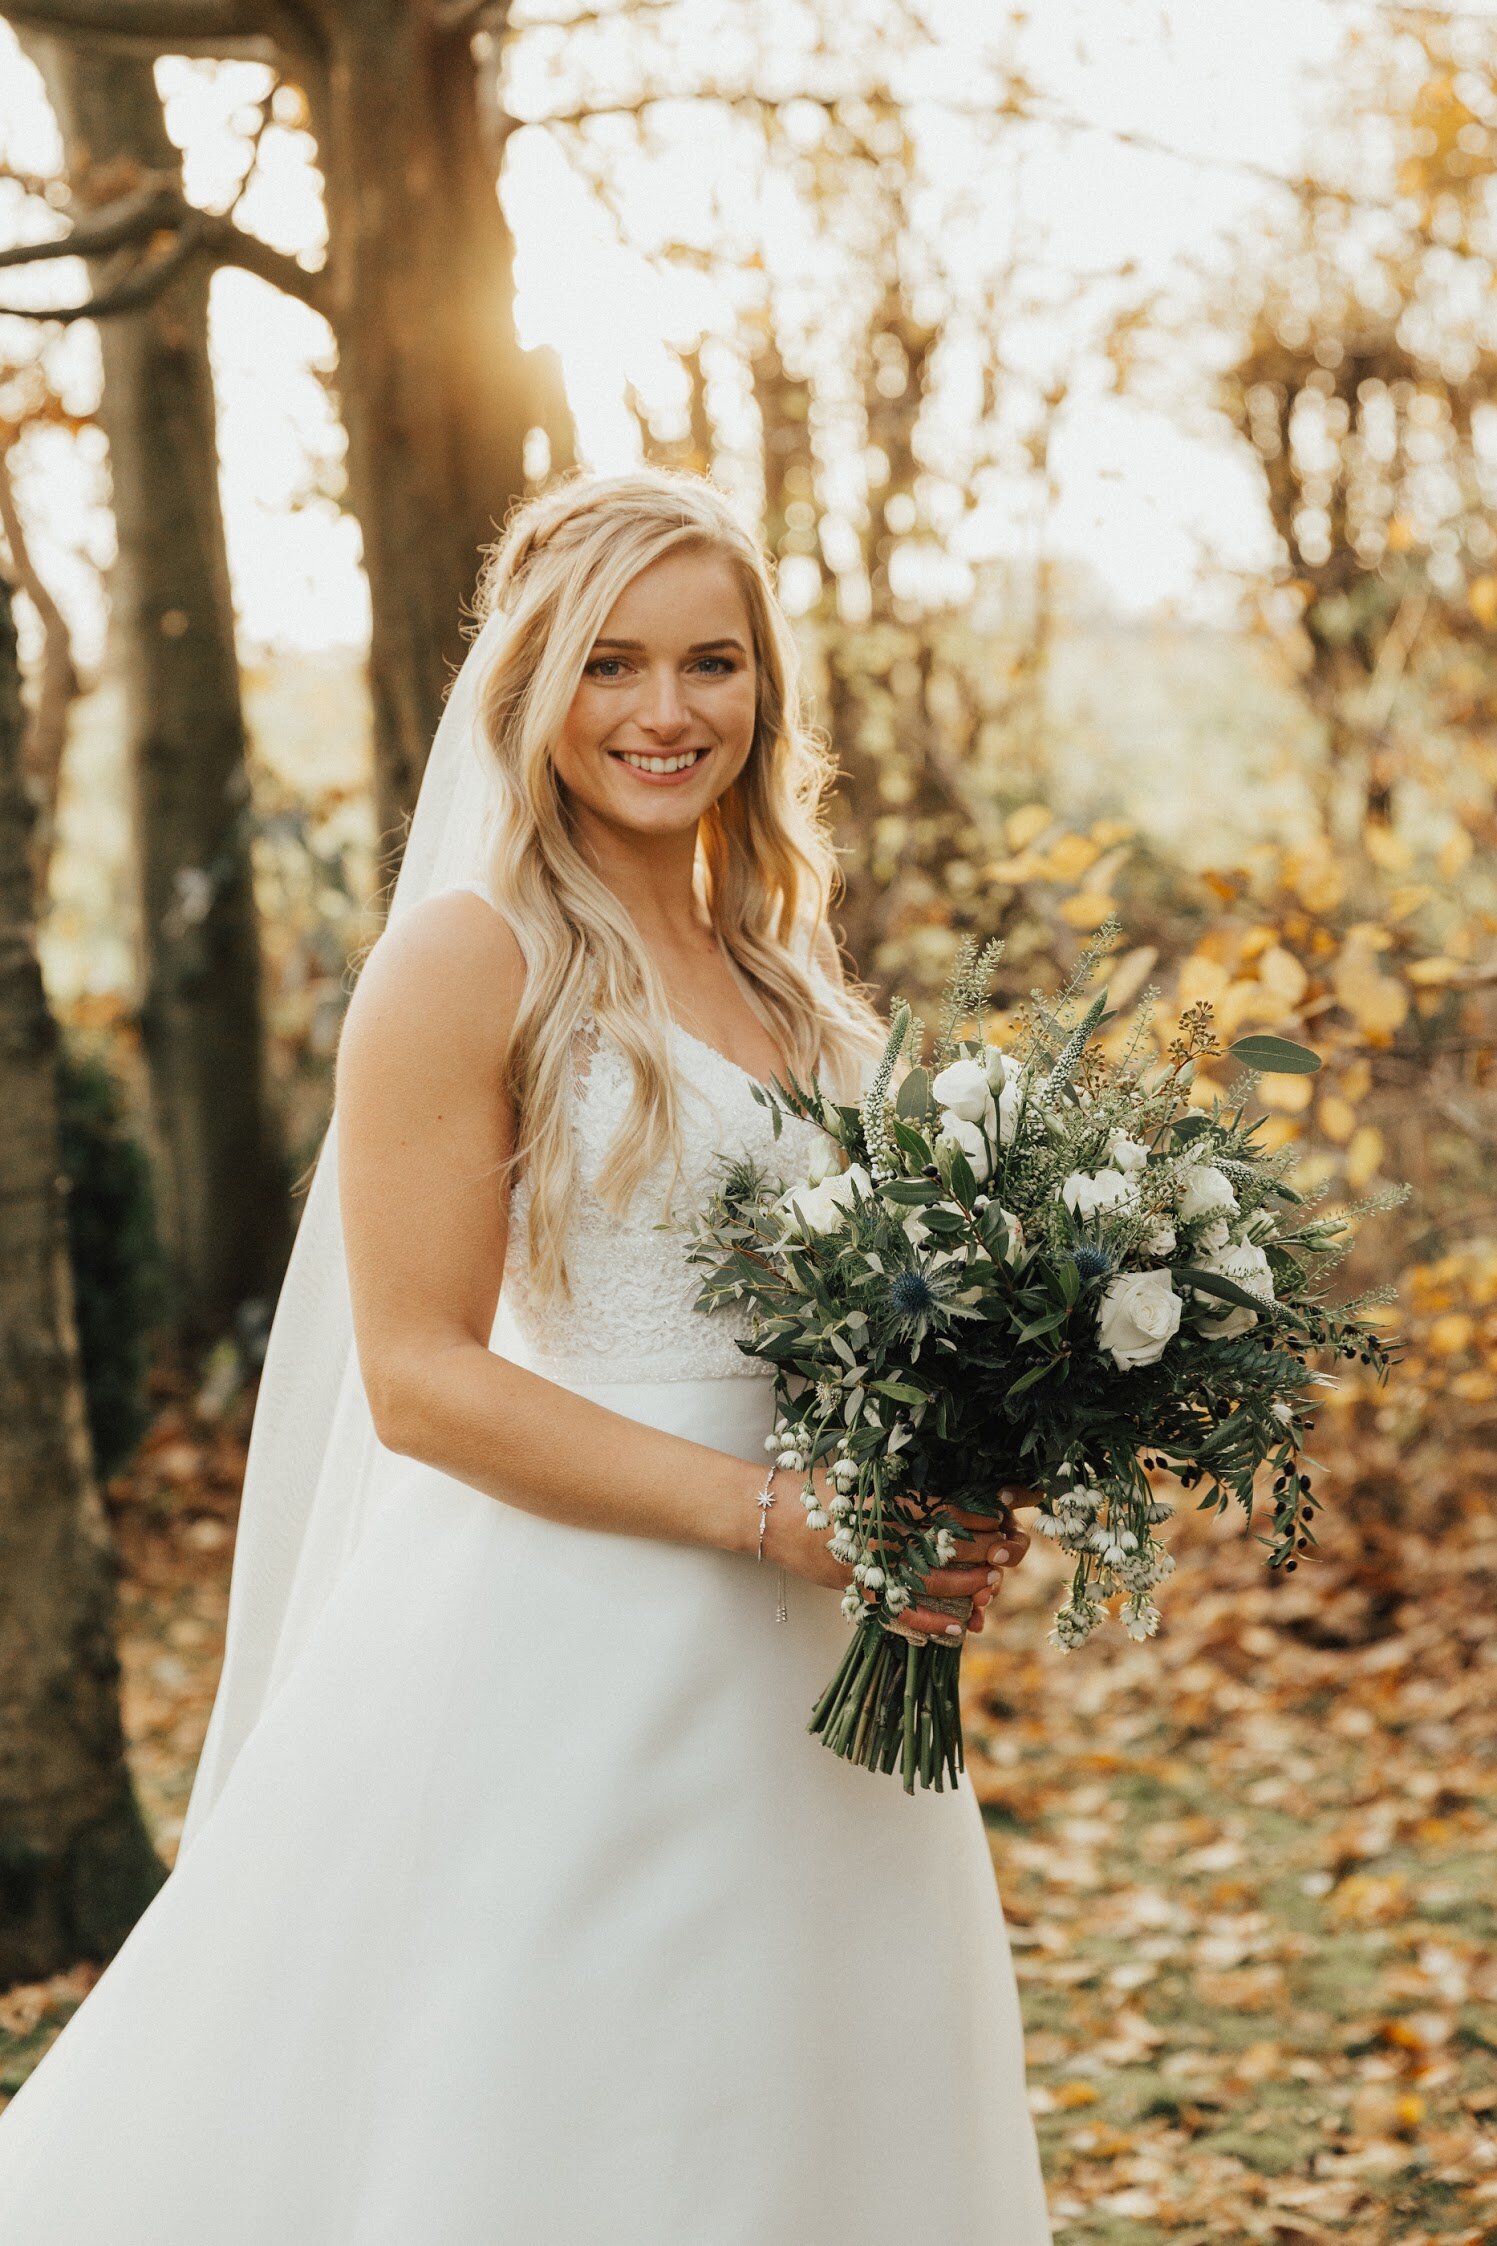 Lottie Rainbow, Cripps Barn Wedding 2019